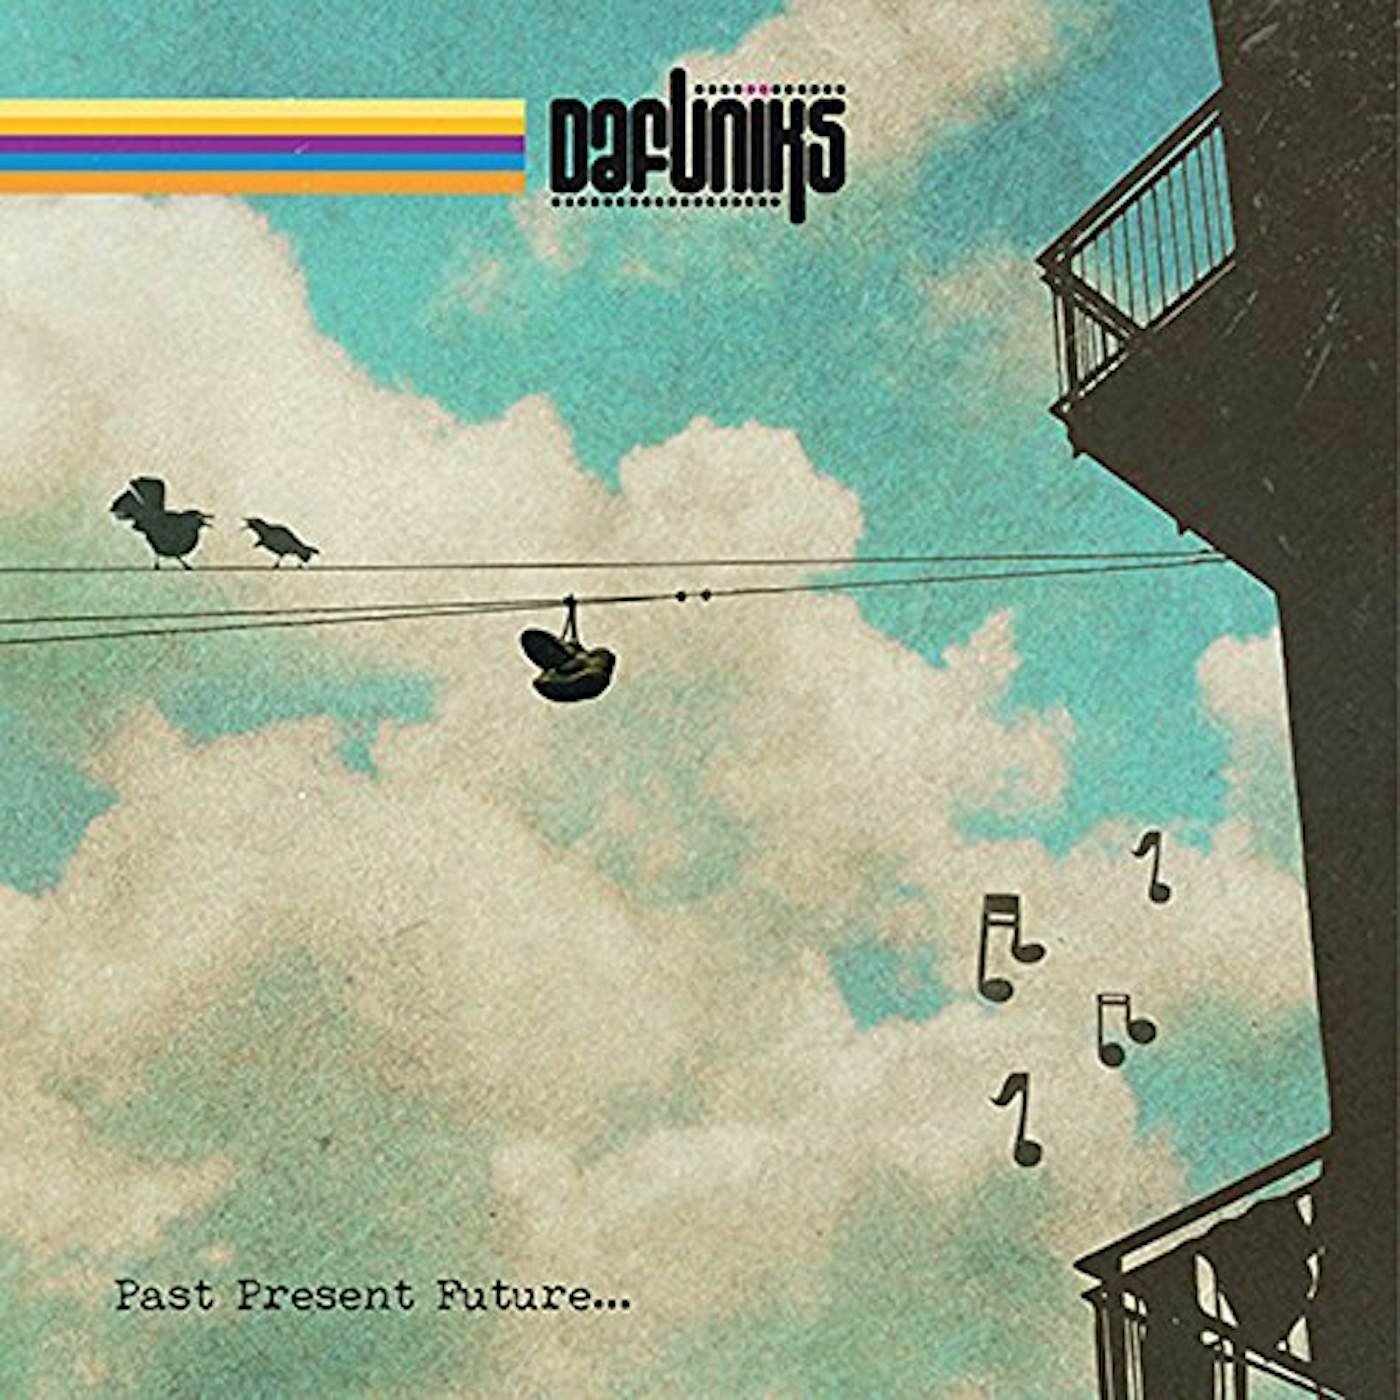 Dafuniks PAST PRESENT FUTURE CD